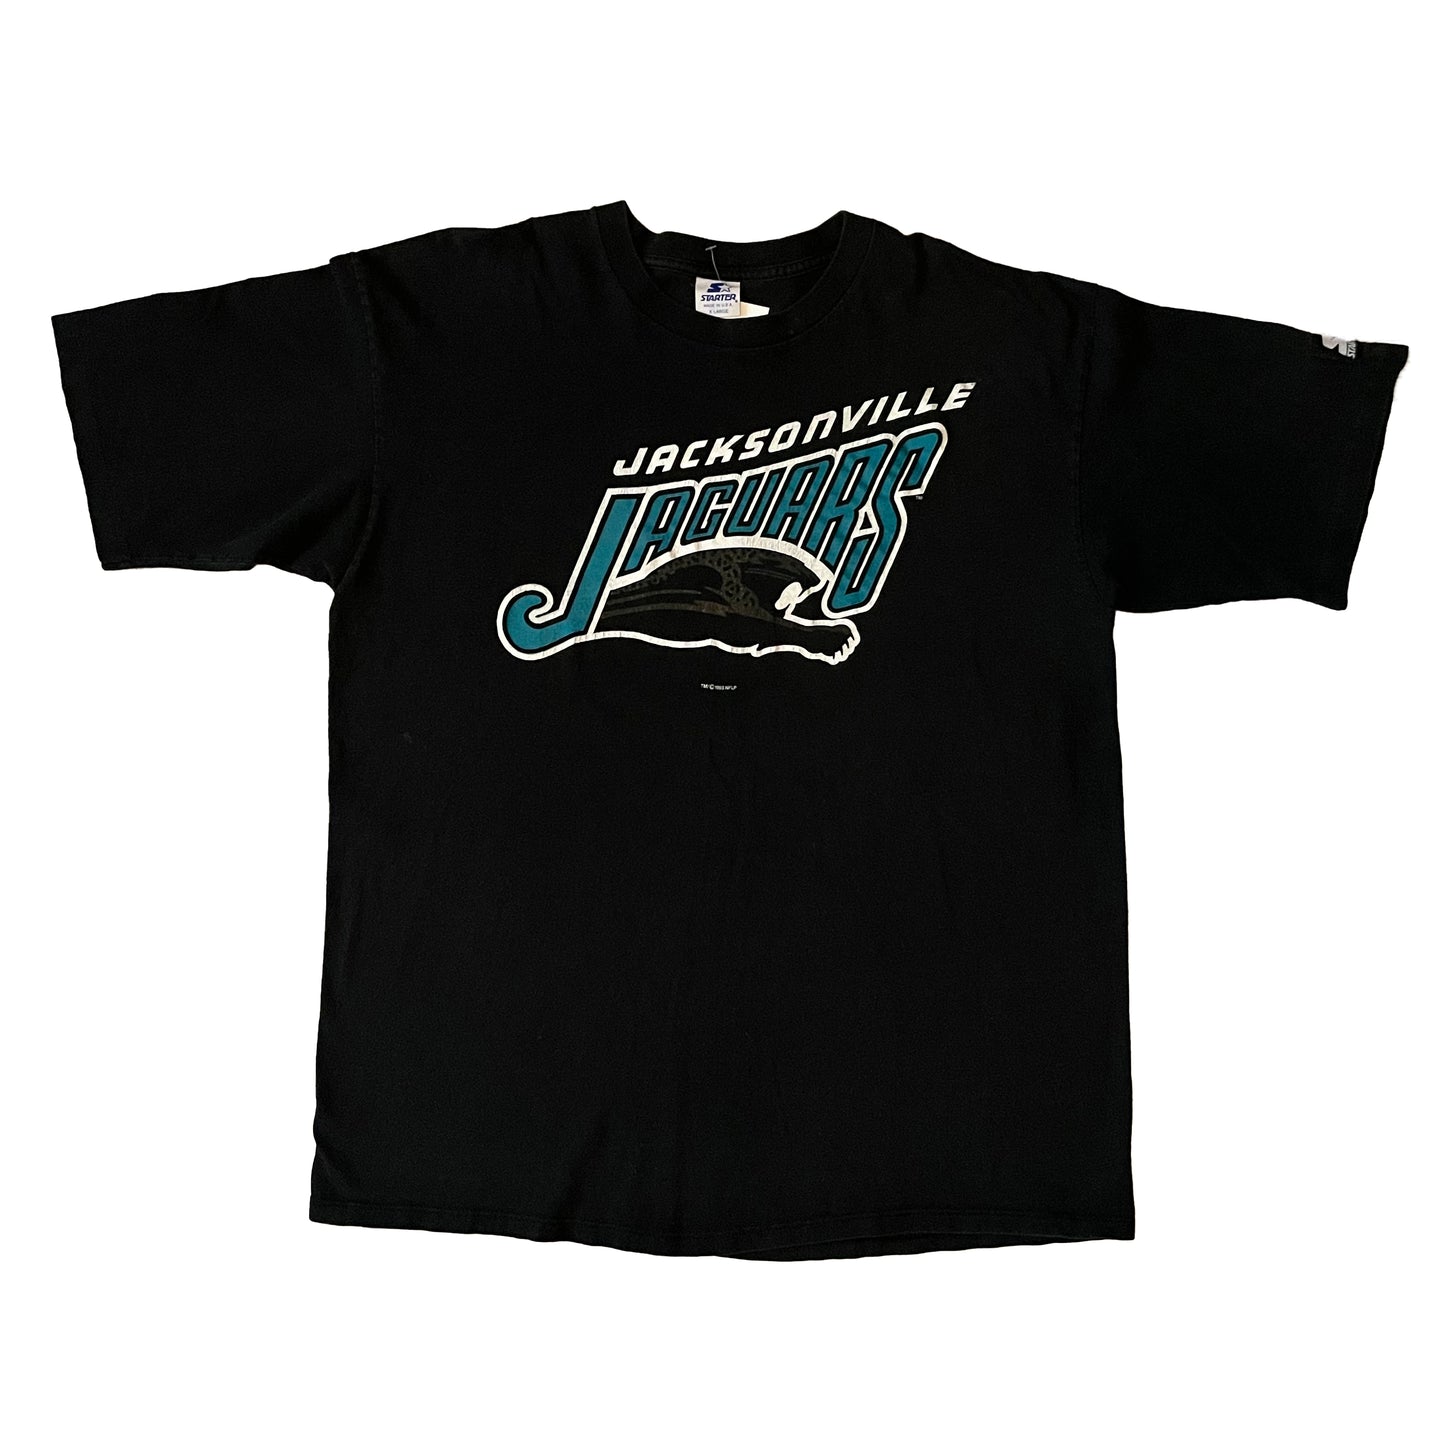 Jacksonville Jaguars 1993 STARTER banned logo shirt XL